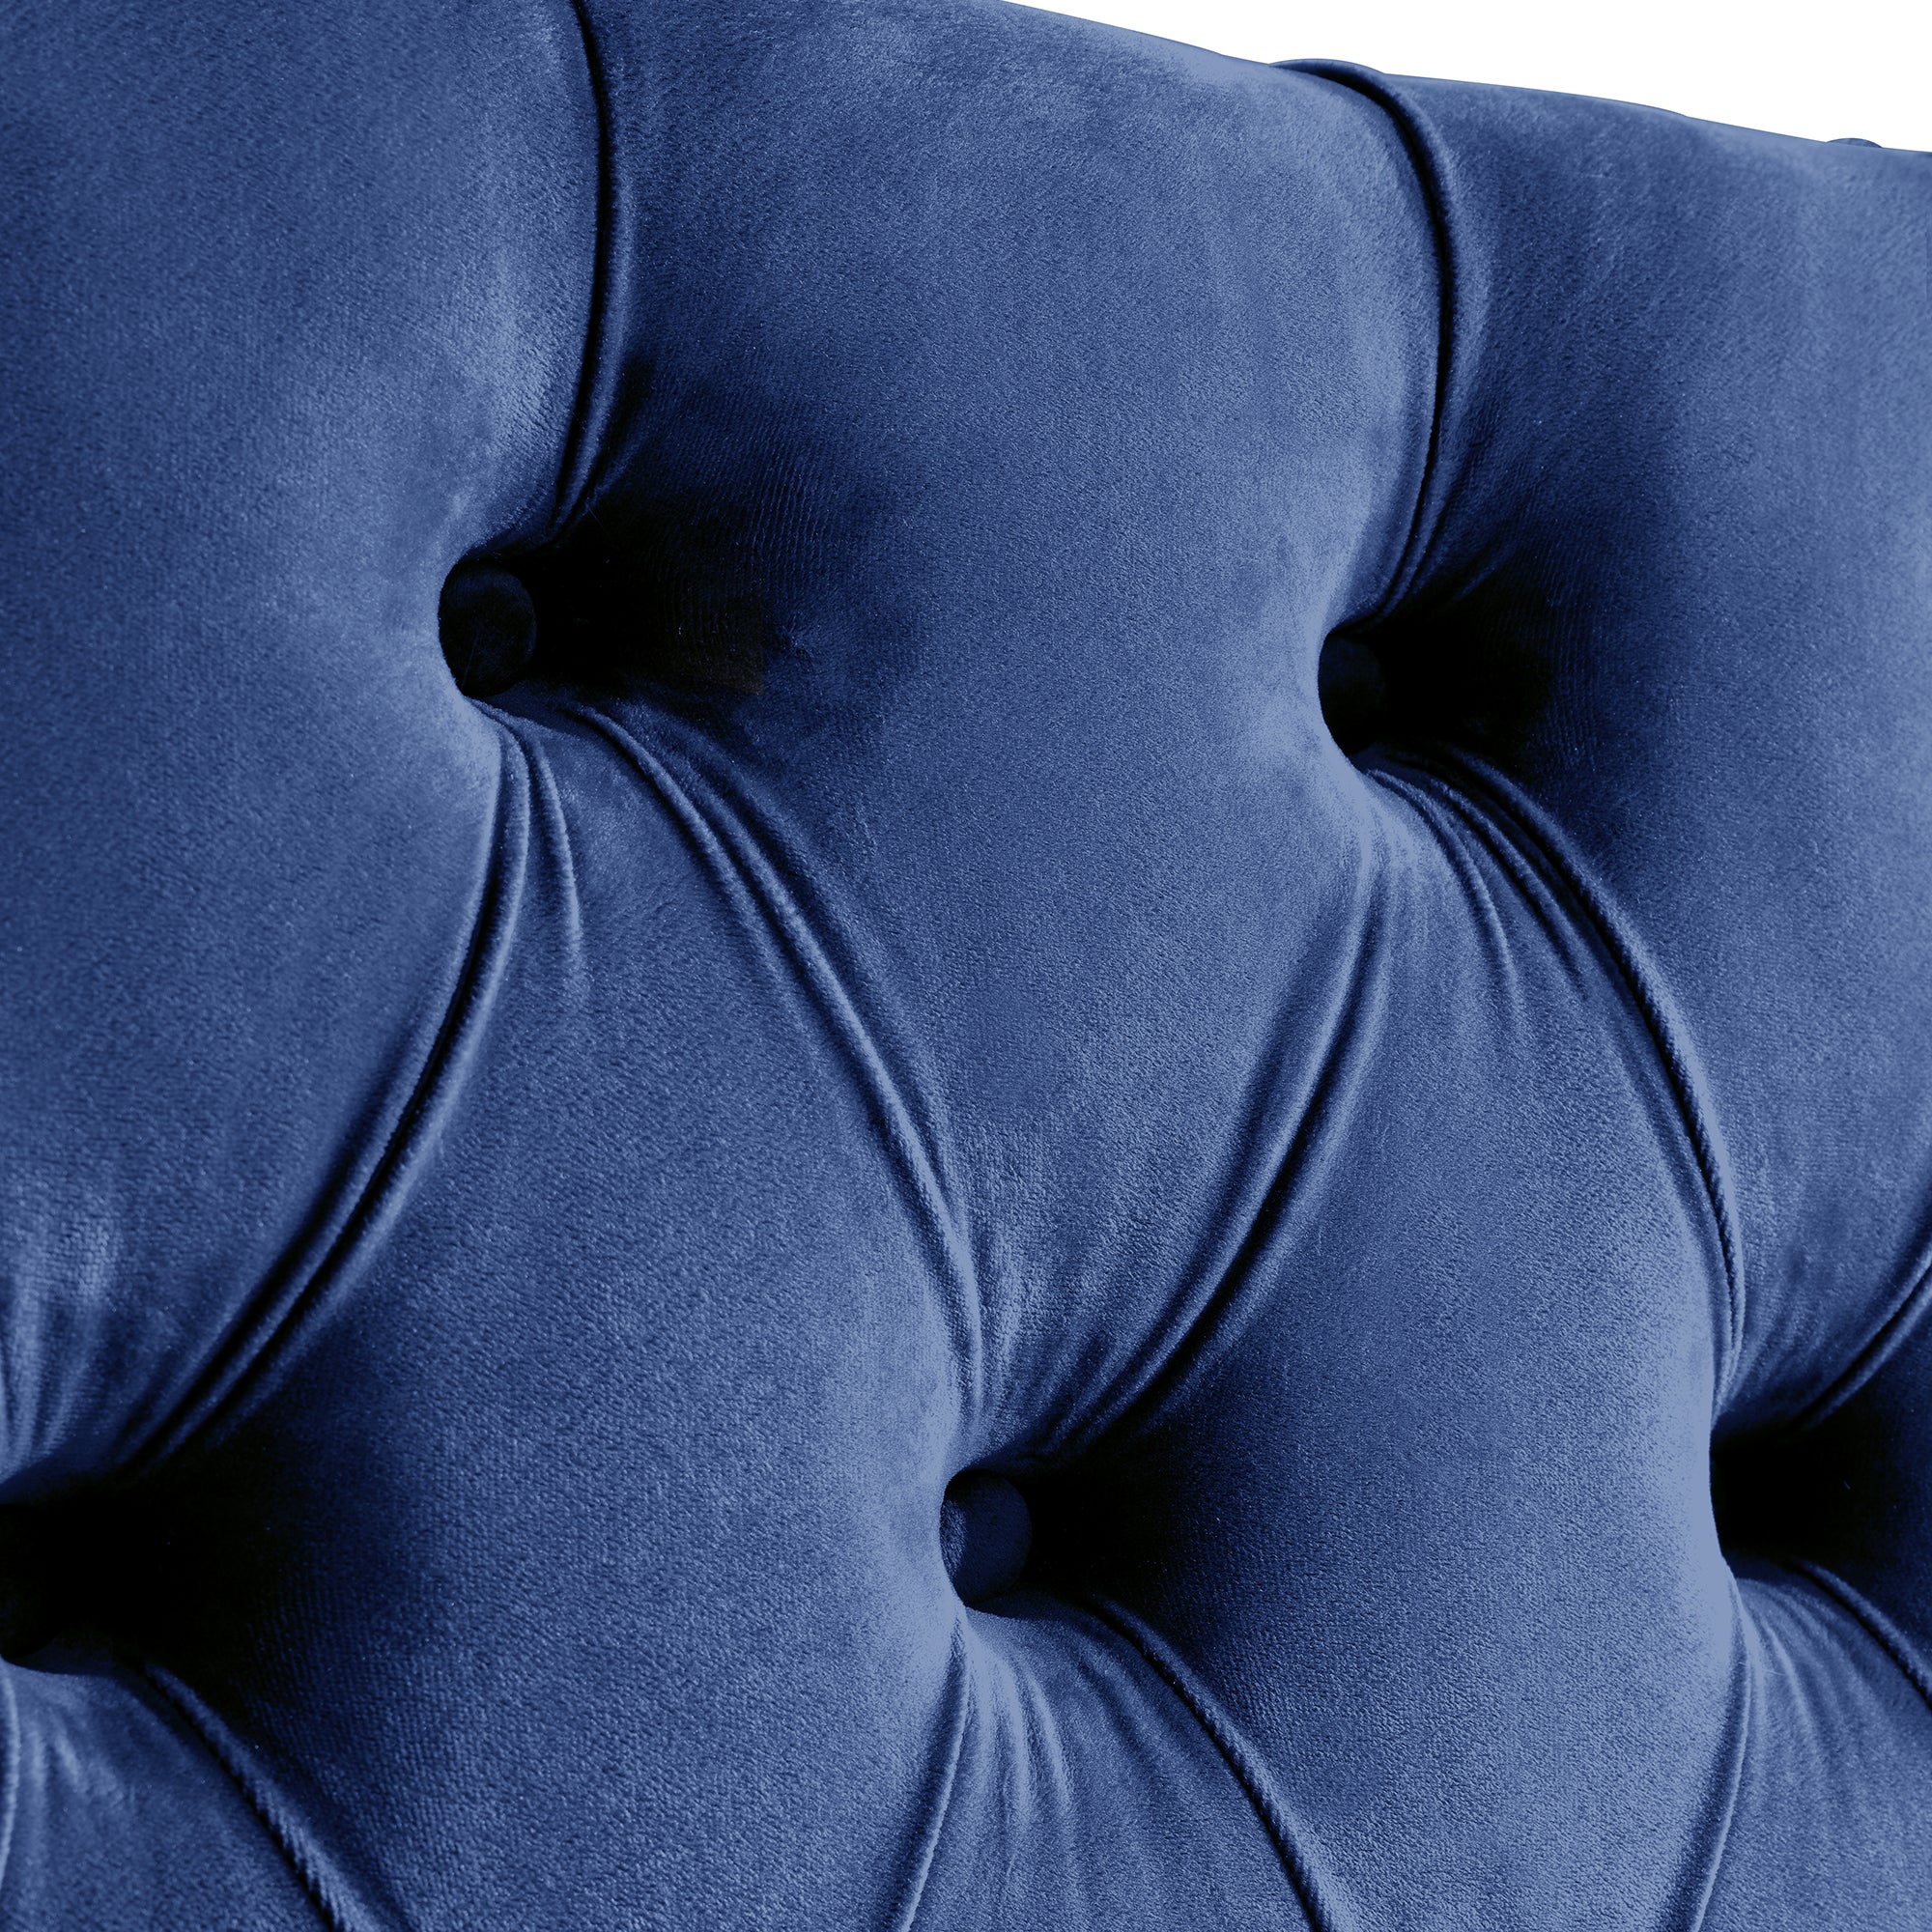 Queen Size Contemporary Velvet Bed with Storage Locker - Blue